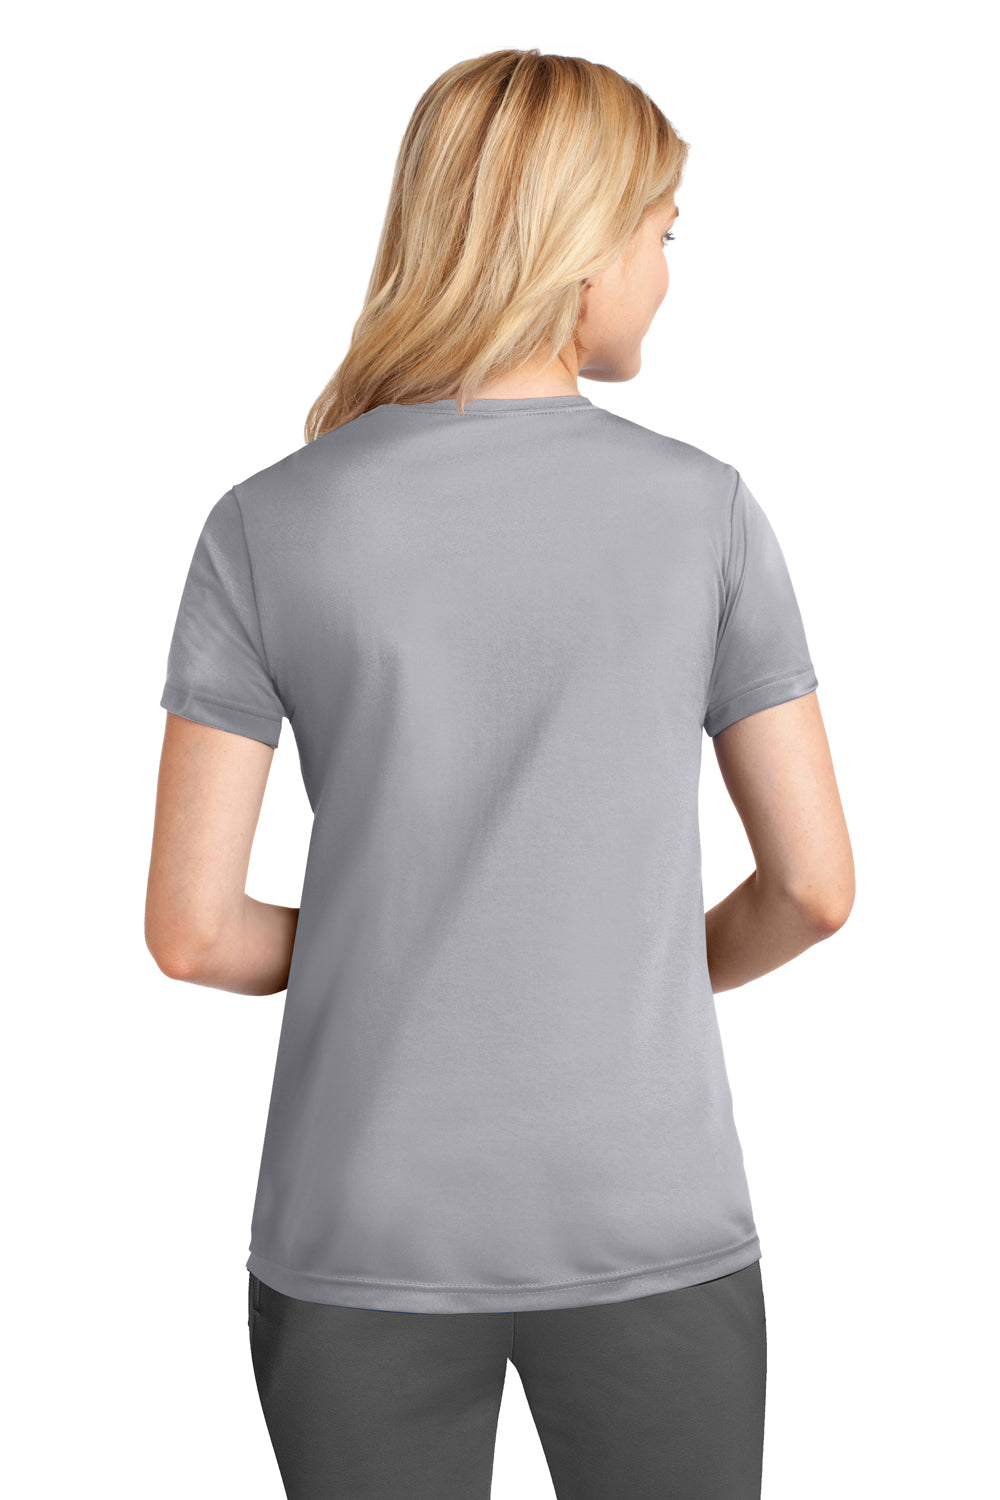 Port & Company LPC380 Womens Dry Zone Performance Moisture Wicking Short Sleeve Crewneck T-Shirt Silver Grey Back